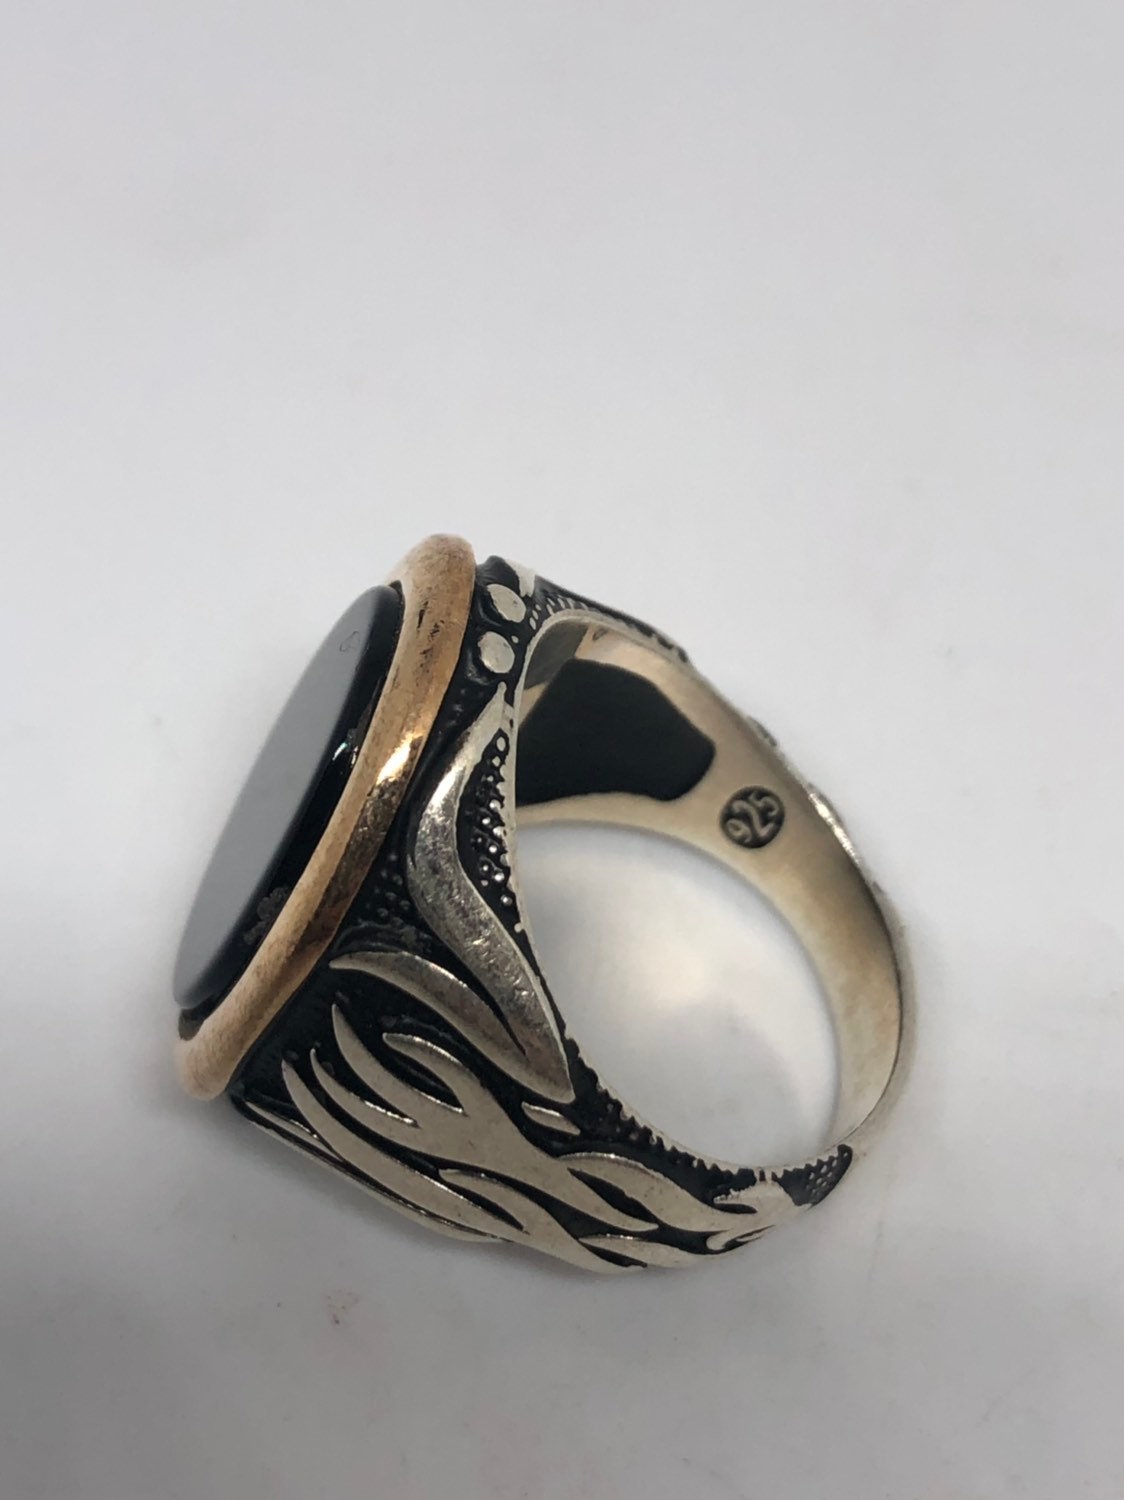 Vintage Onyx Mens Ring in 925 Sterling Silver Persian Genuine Black Onyx